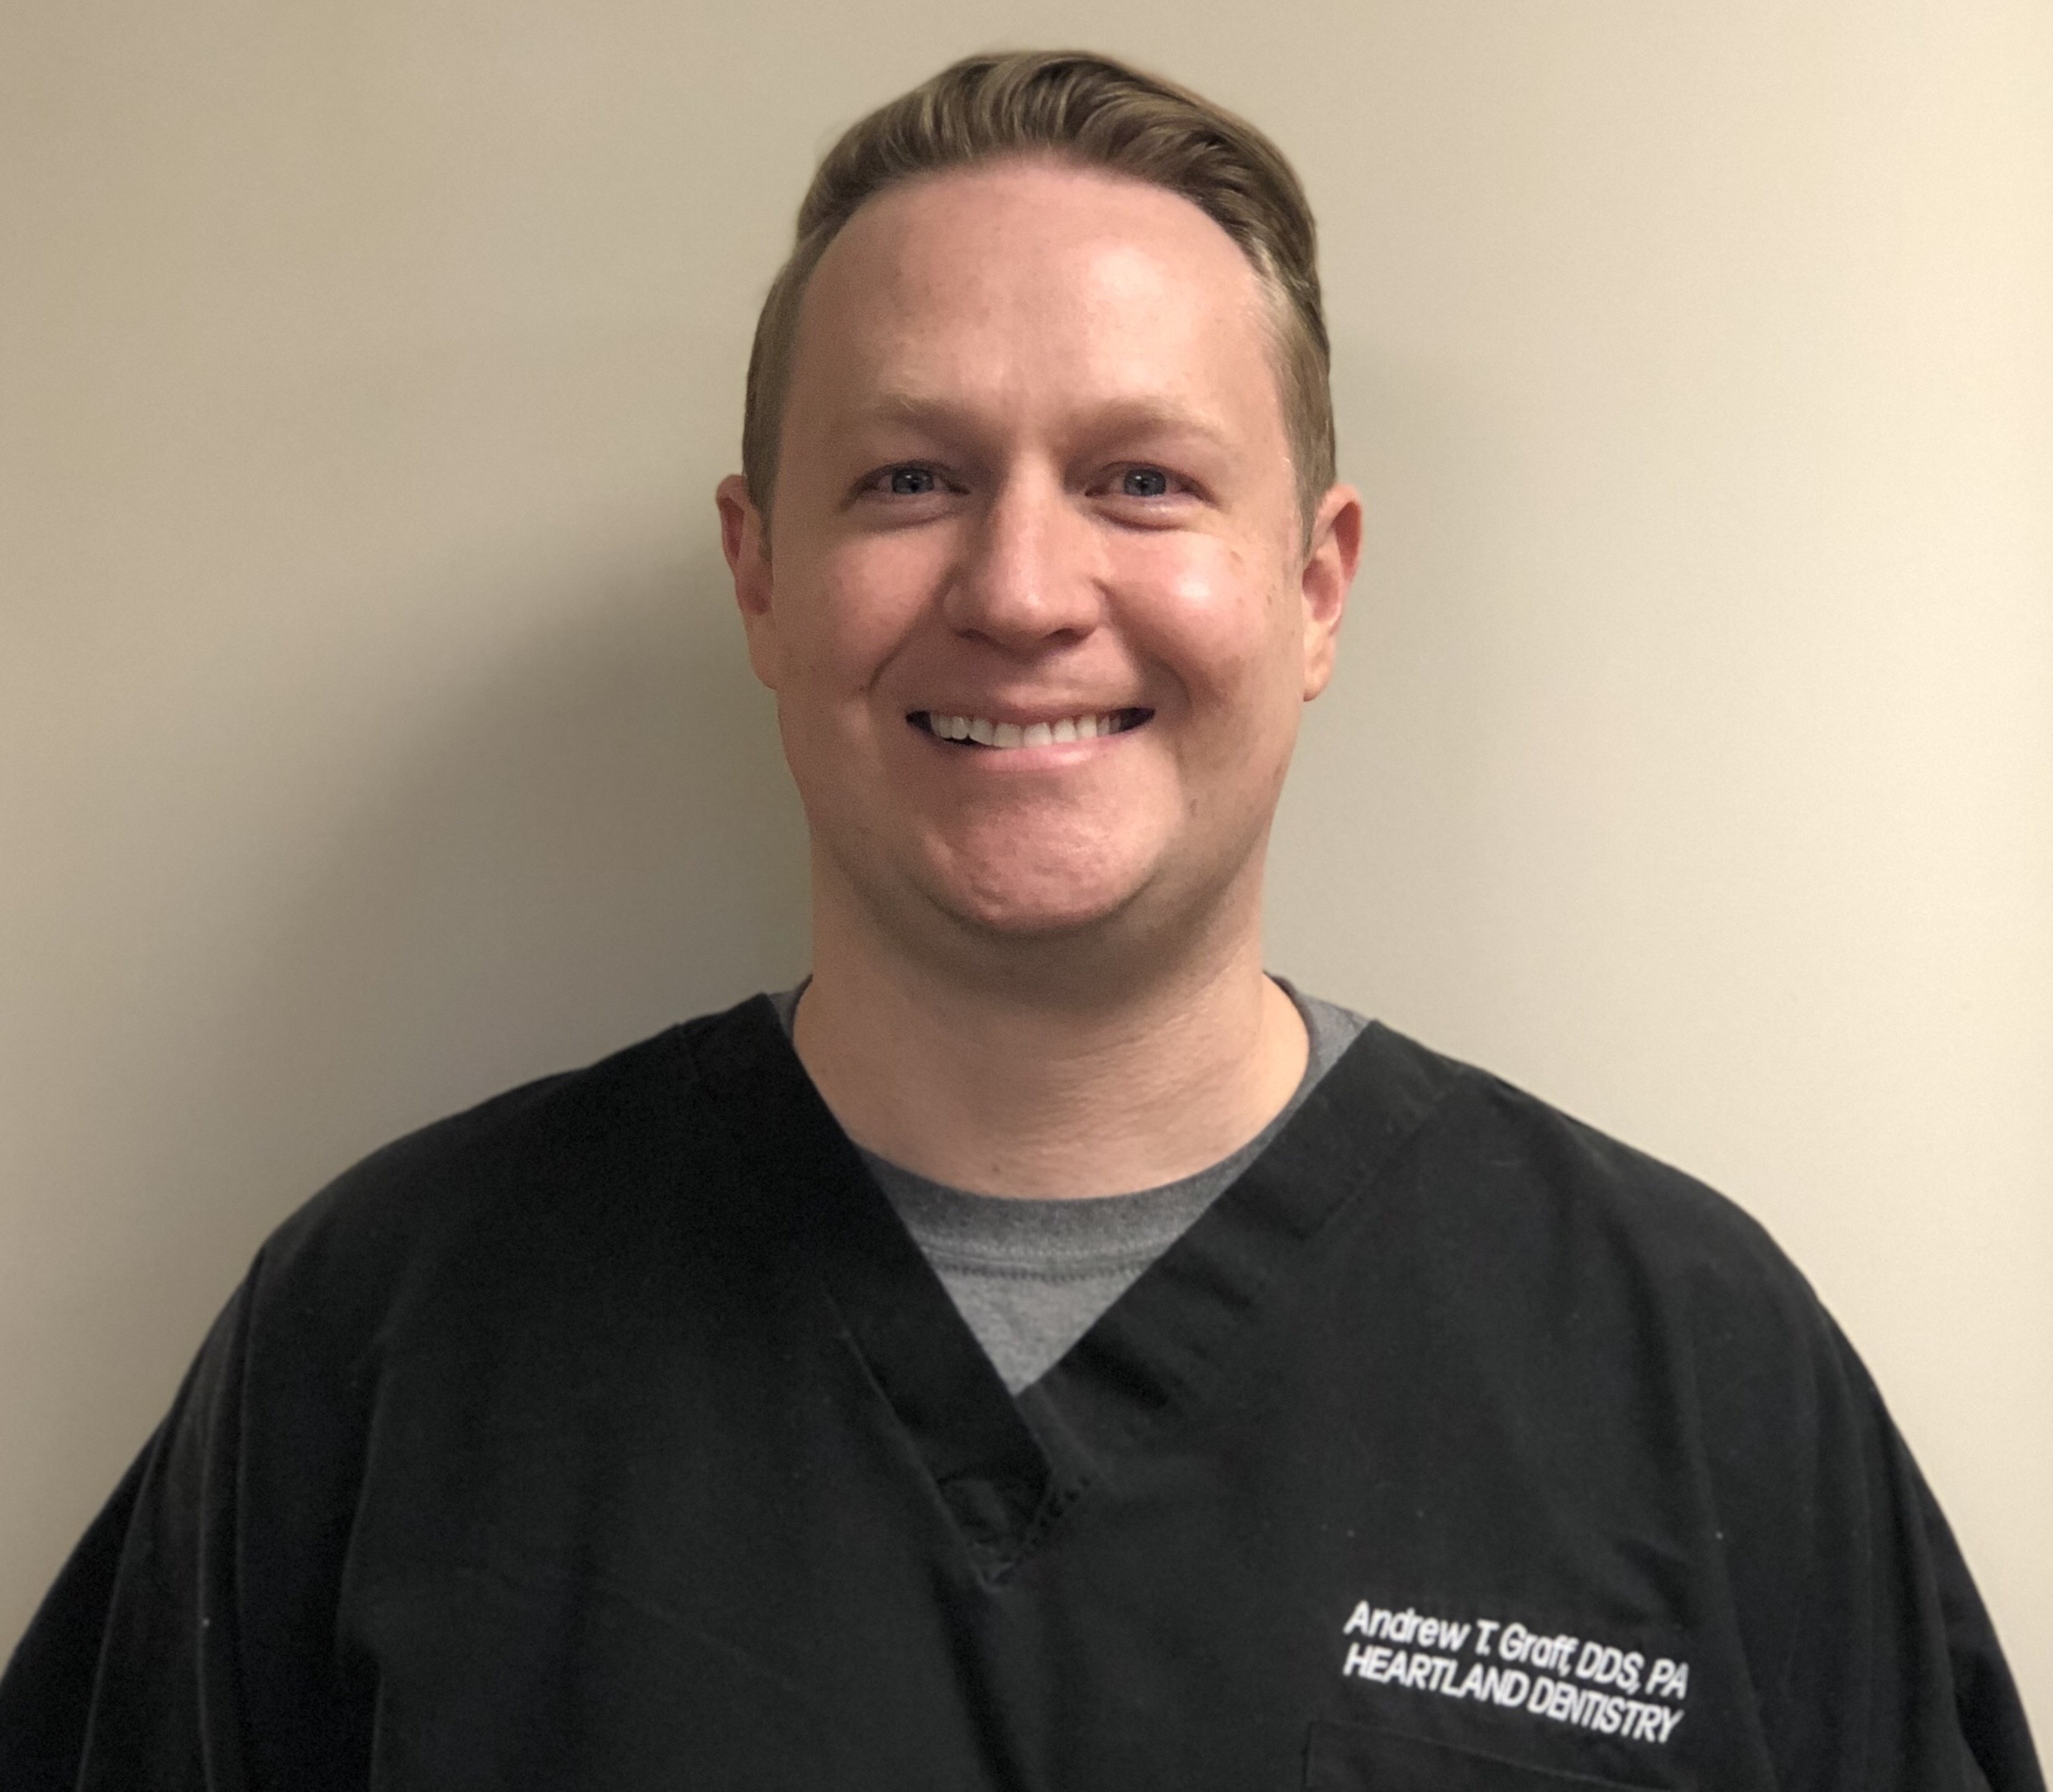 Dr. Andrew Graff of Heartland Dentistry in Wichita, KS